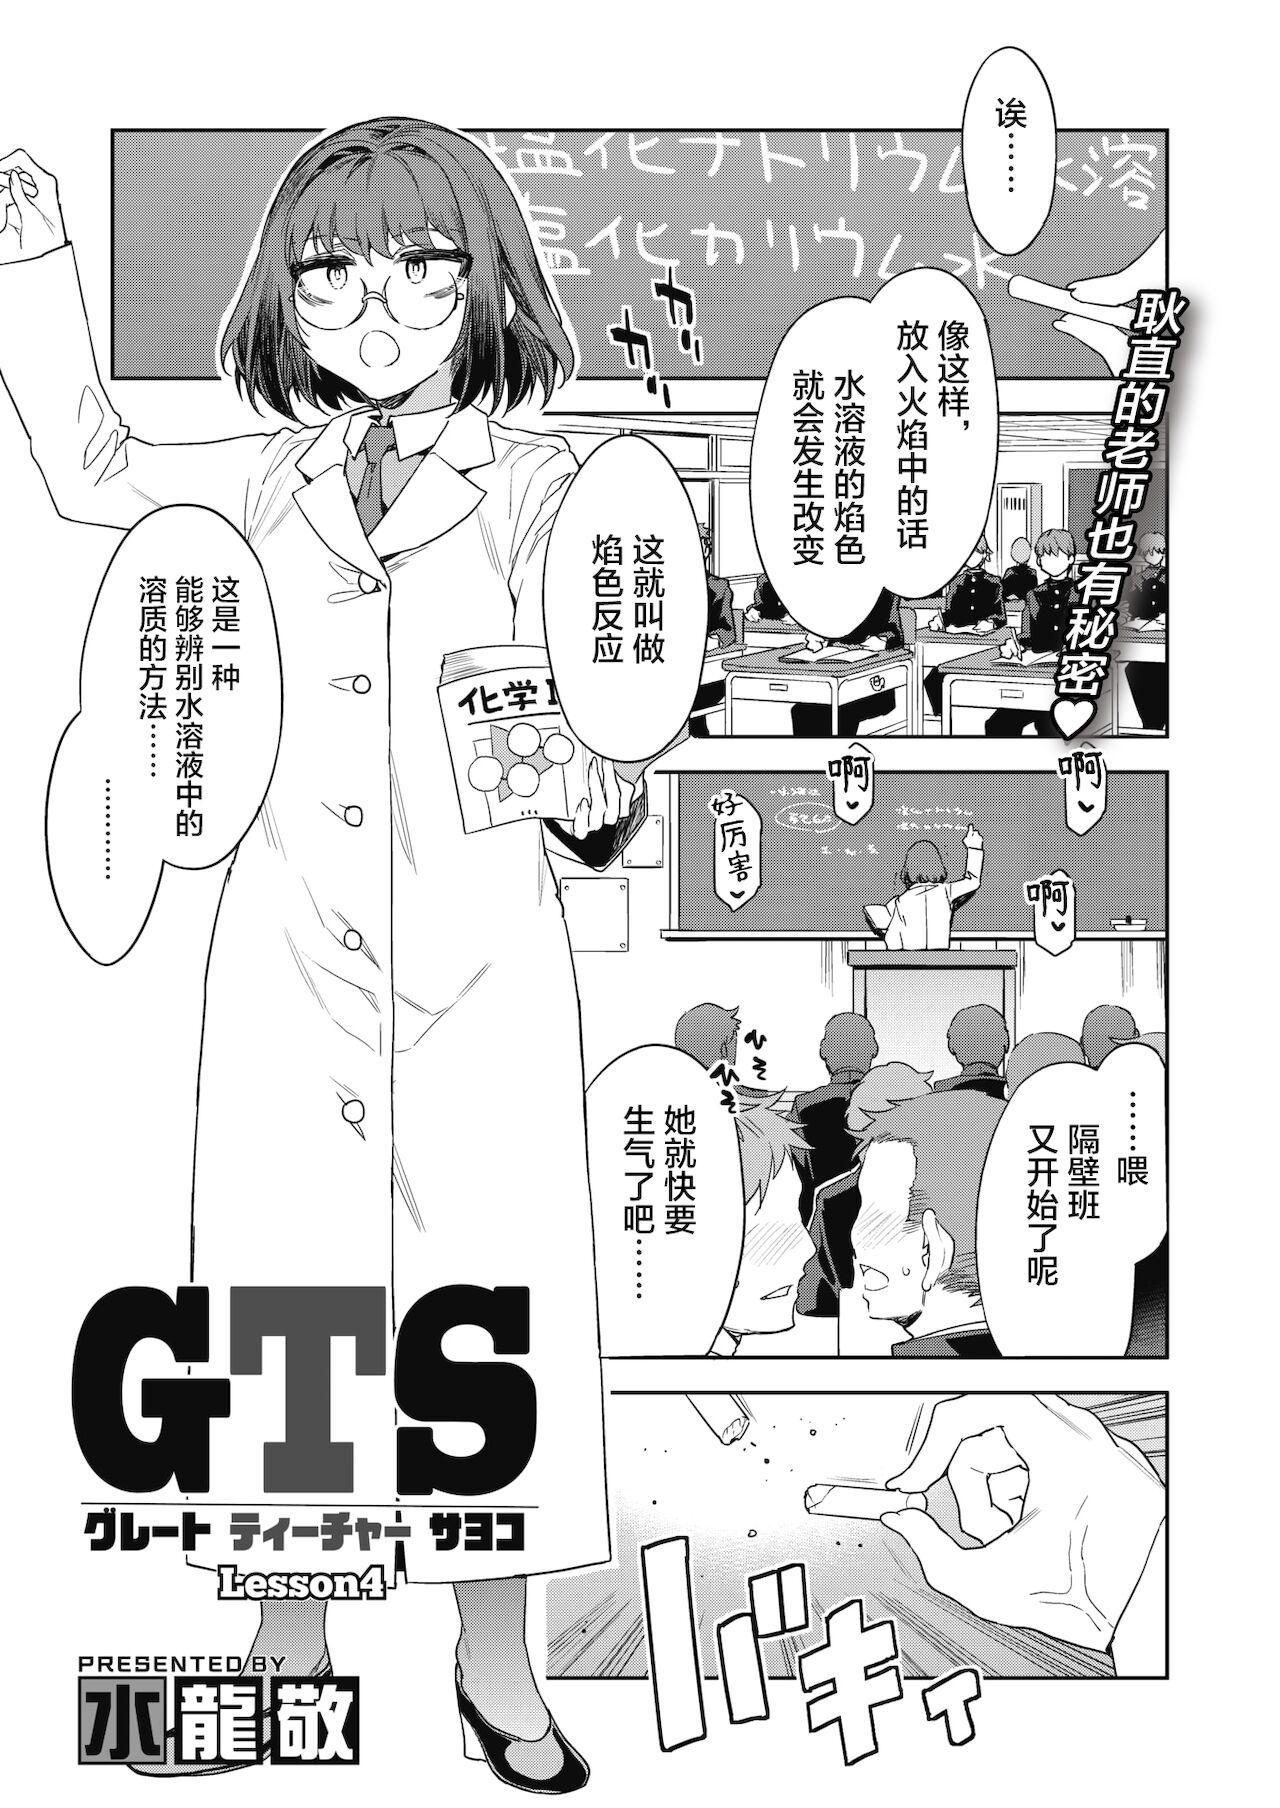 Thong GTS Great Teacher Sayoko Lesson 4 - Original Ftvgirls - Page 1